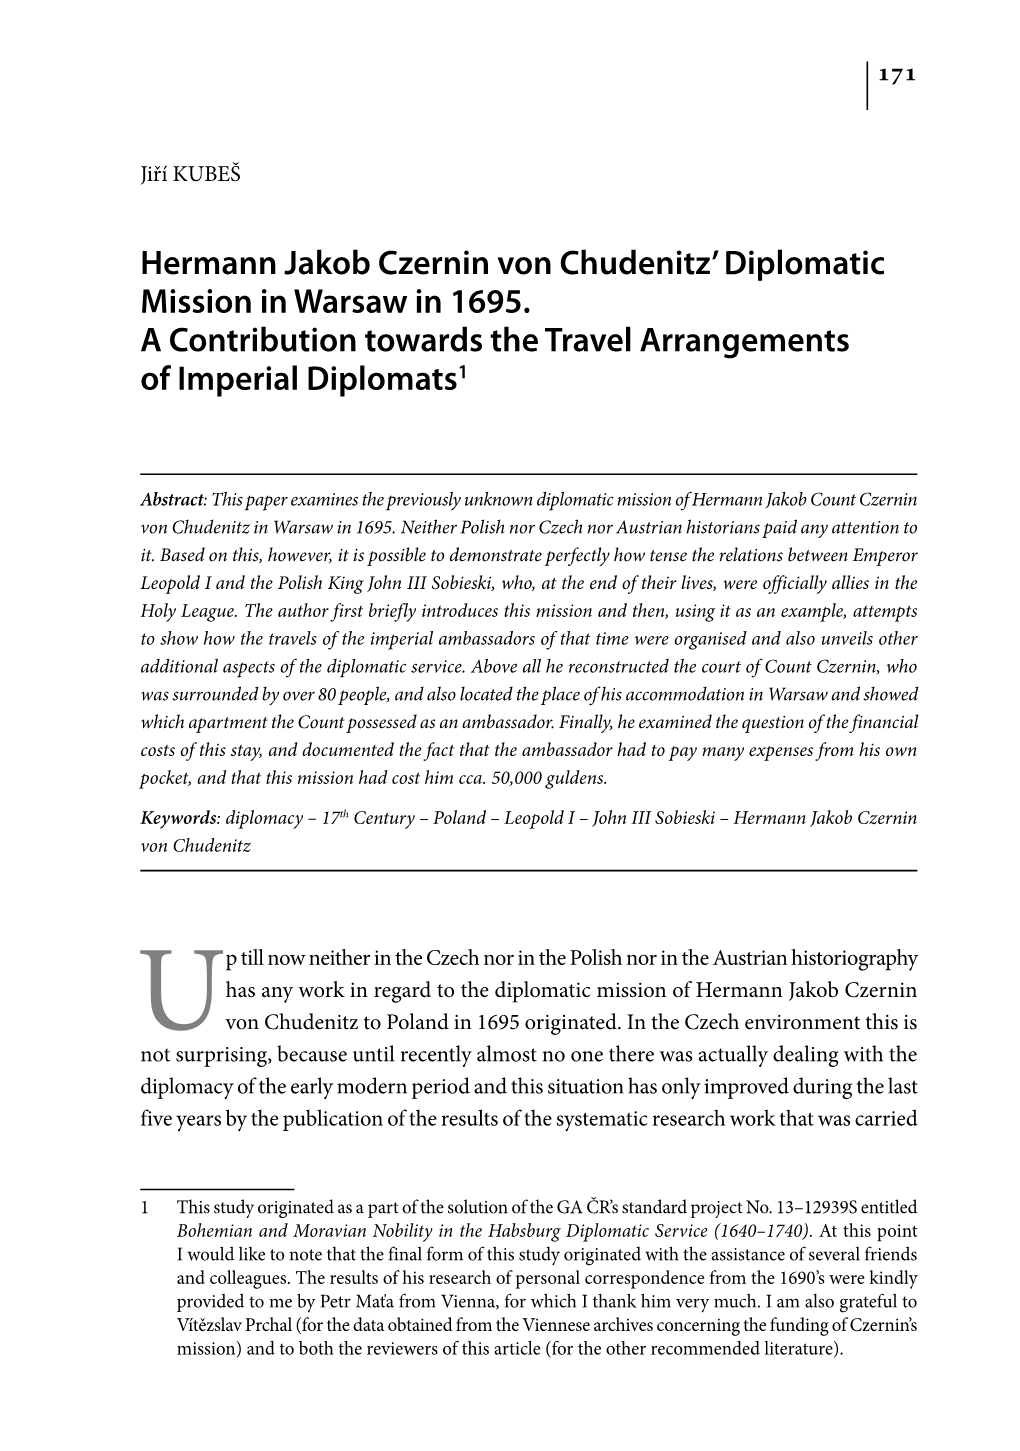 Hermann Jakob Czernin Von Chudenitz' Diplomatic Mission In